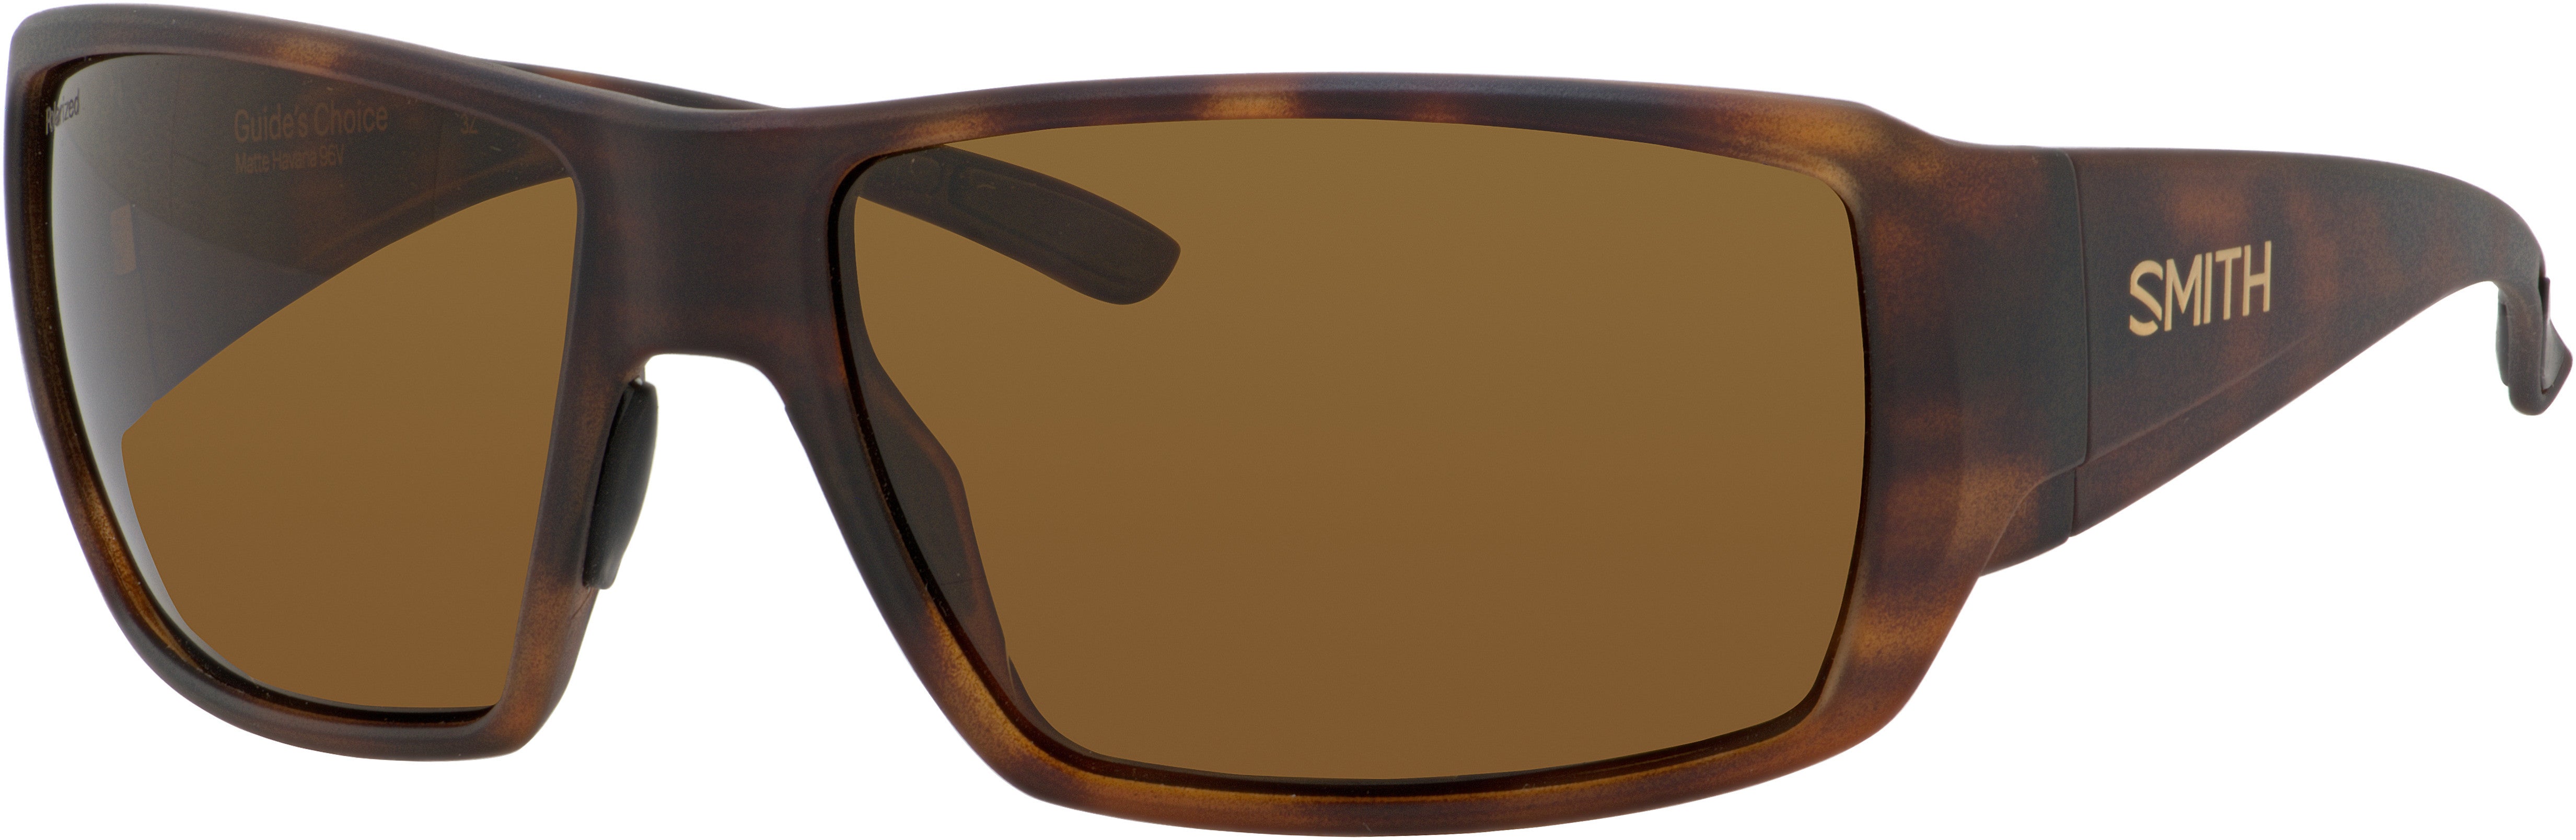 Smith Guides Choicebf Rectangular Sunglasses N920-N920  Matte Havana (SP Bronze Pz)